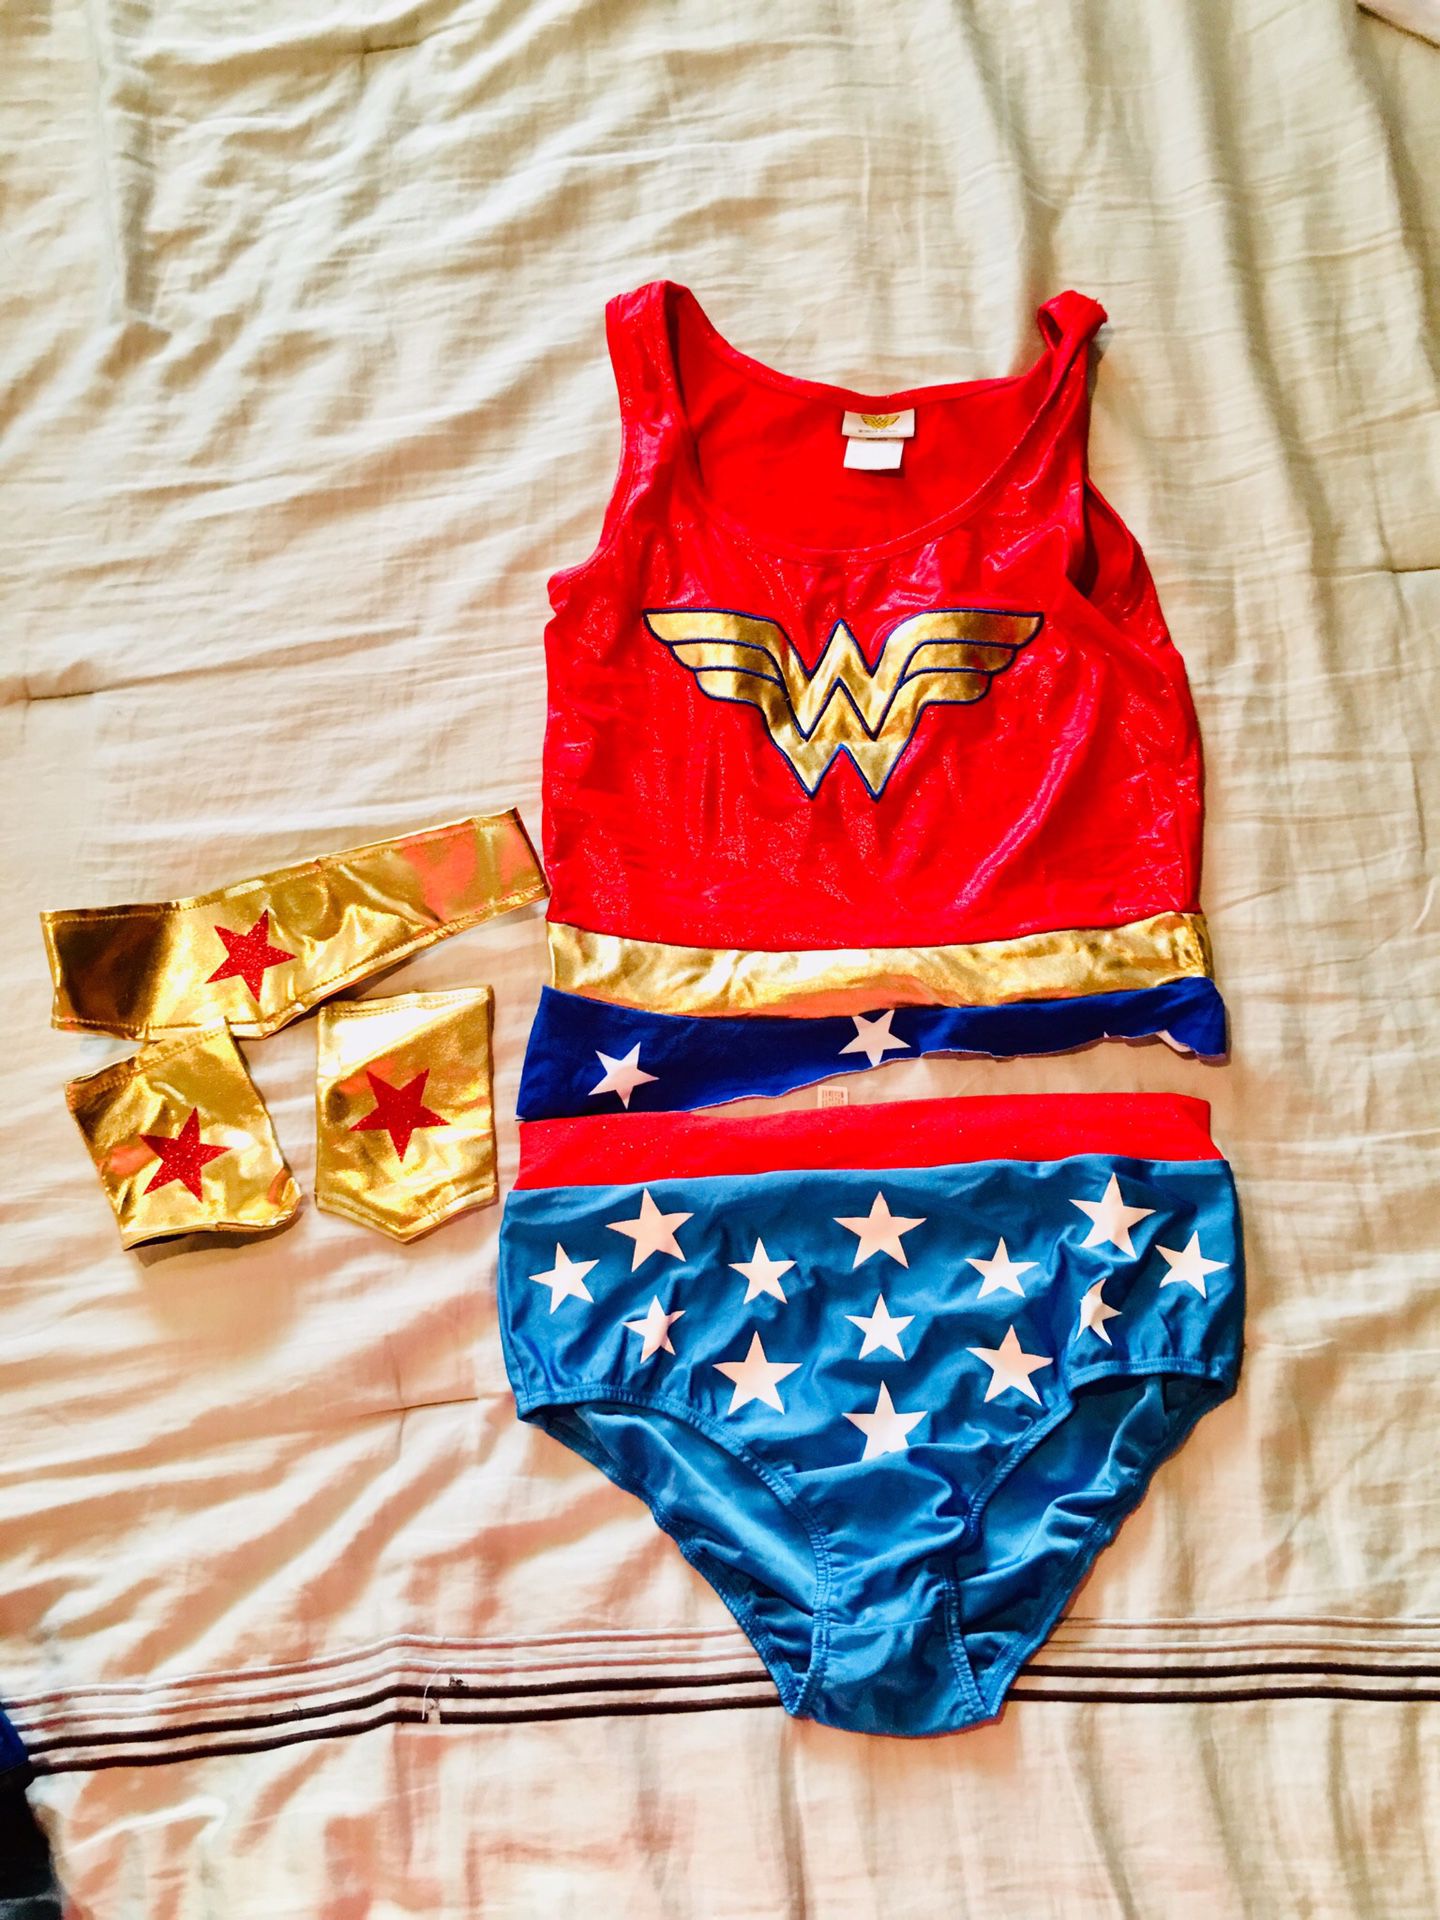 Wonder woman costume